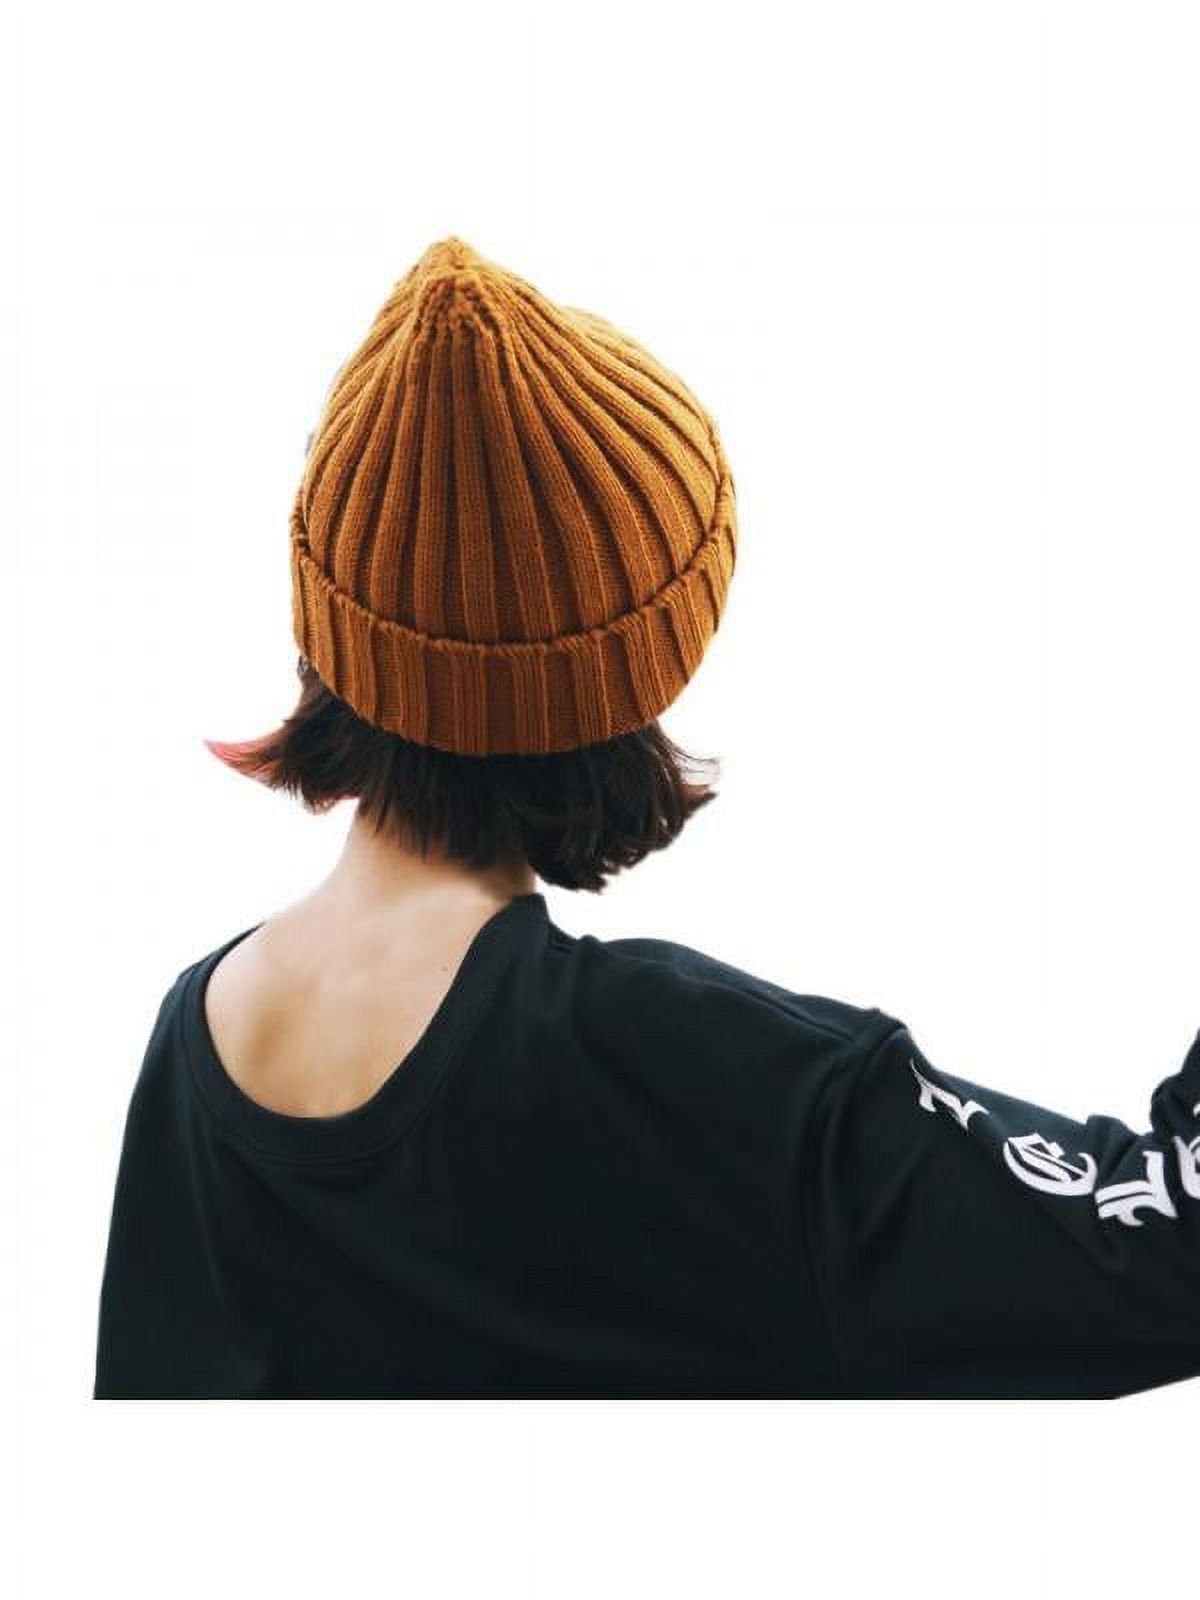 Ropalia Fashion Women Men Winter Knitted Beanies Cap Ski Hat Warm Crochet Knit Cap Hip-Hop Plain Hat - image 2 of 5